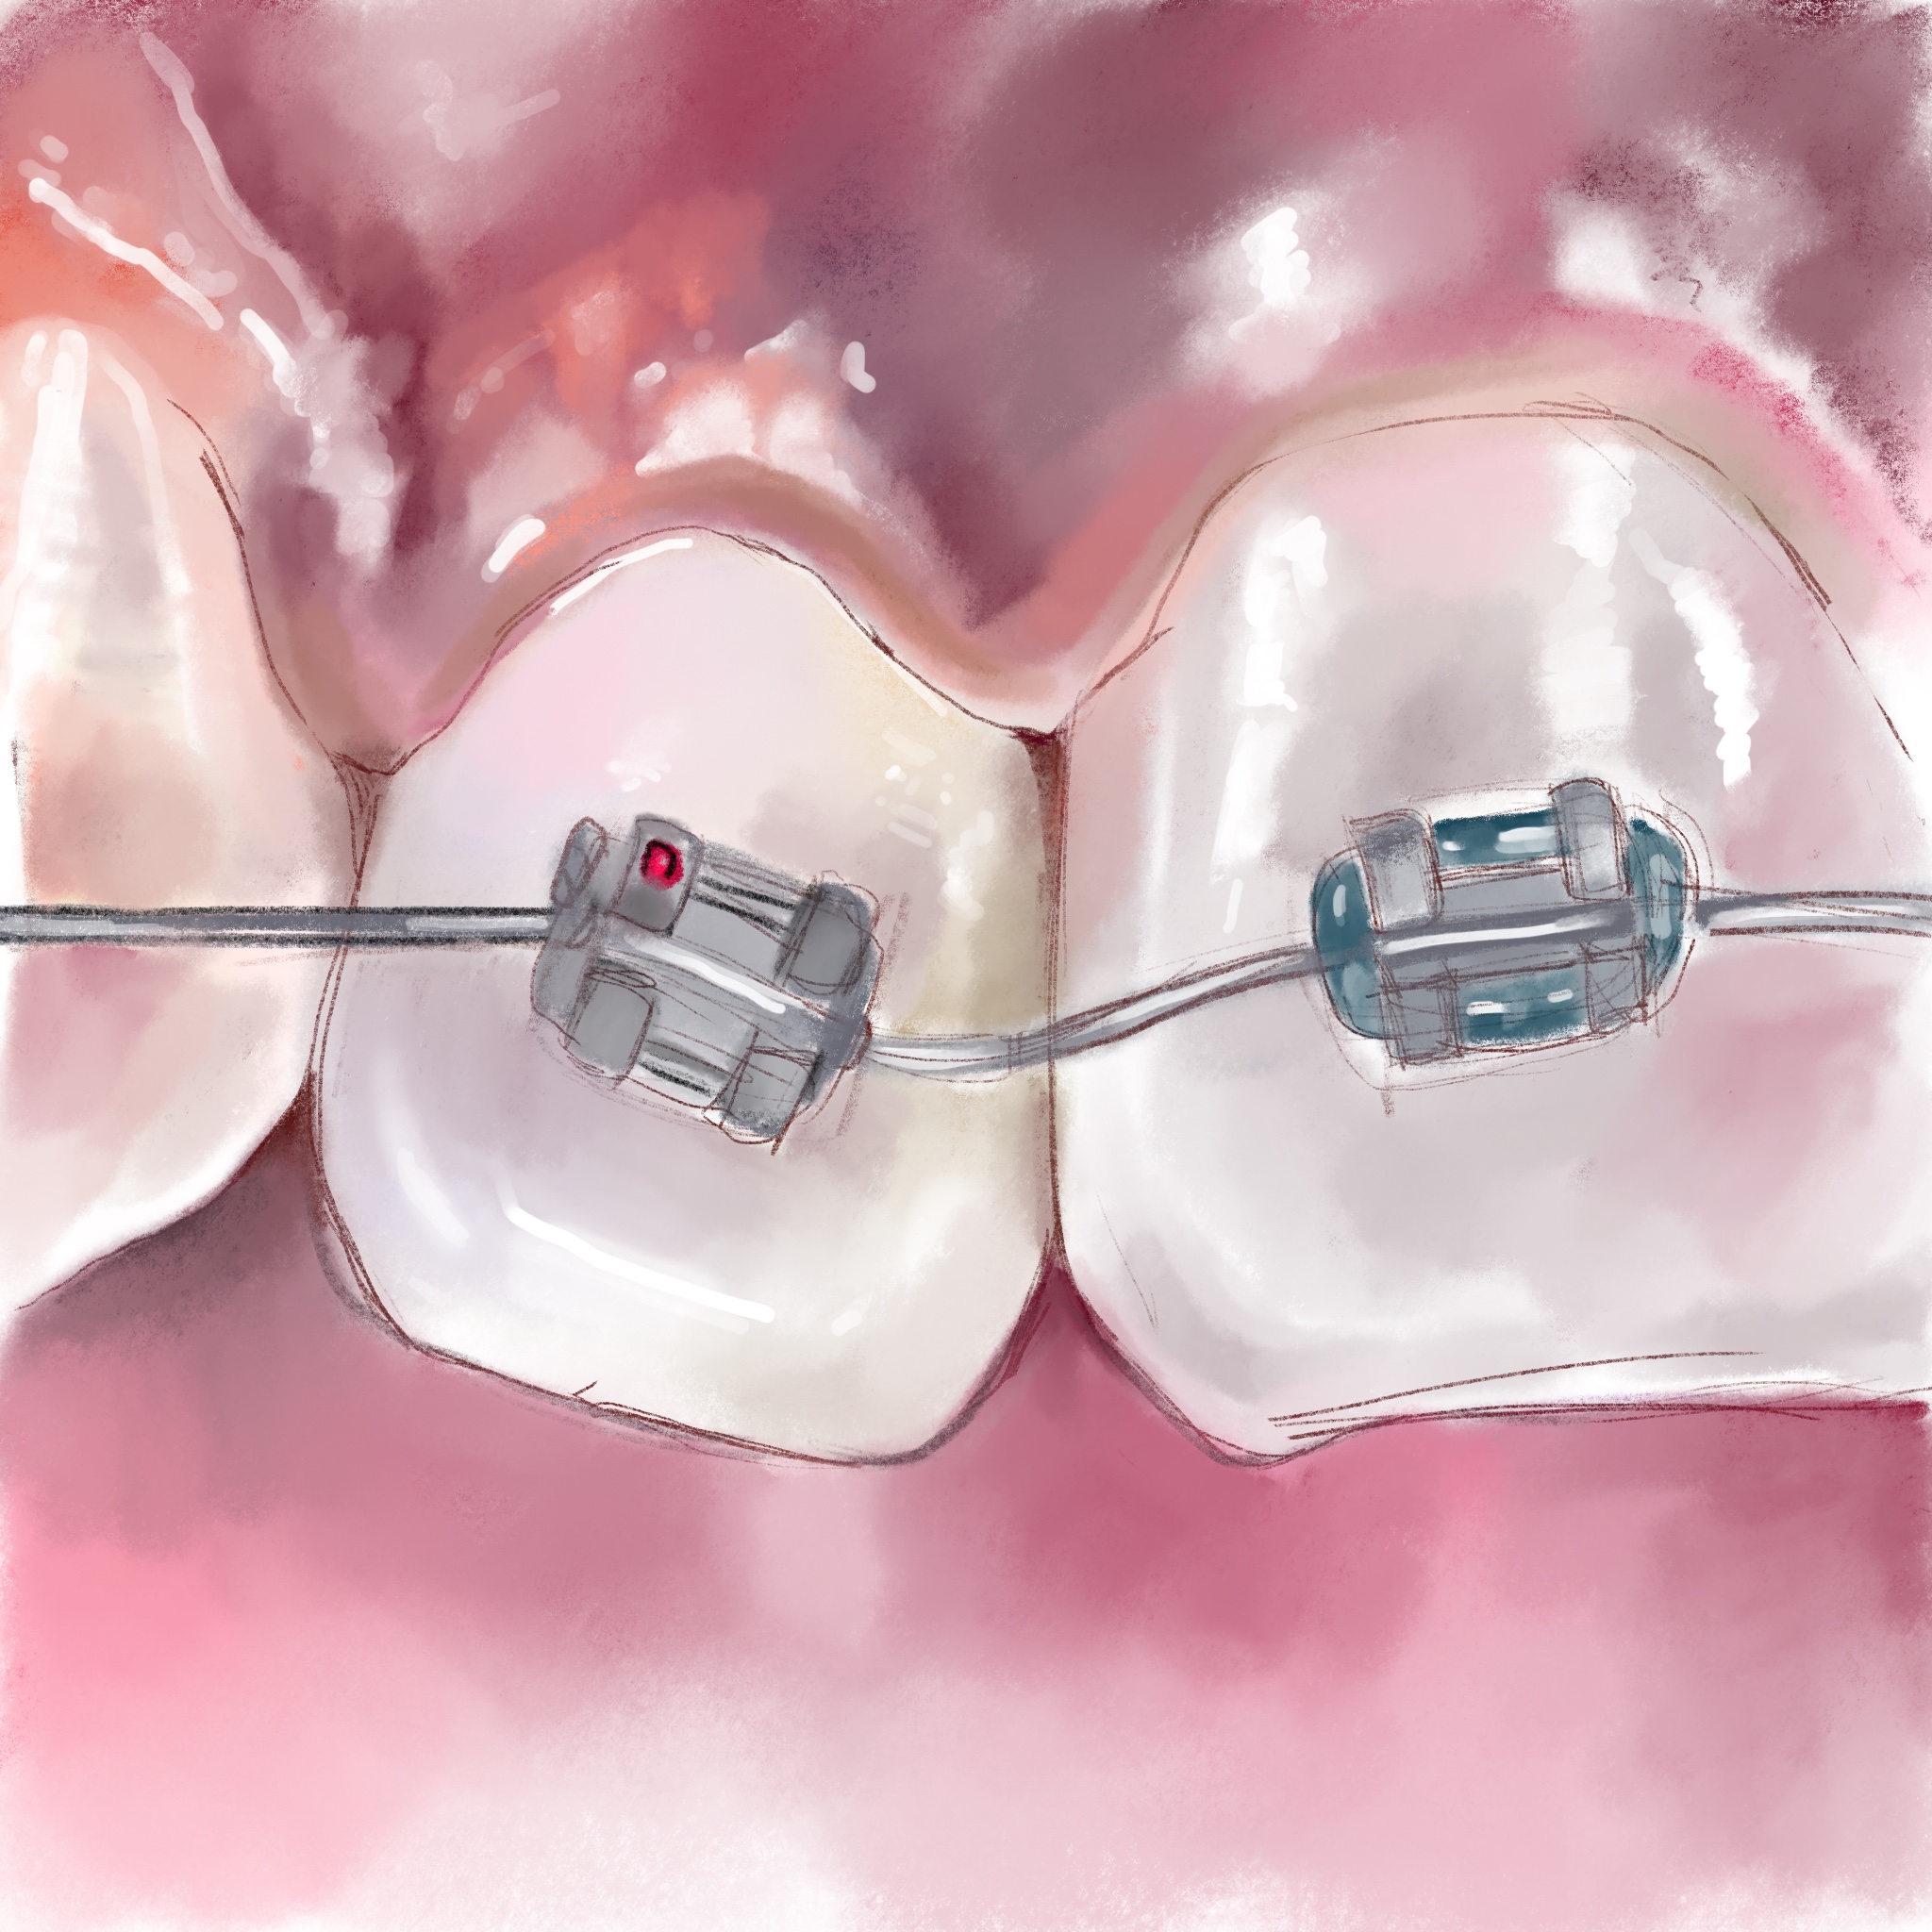 Уход за зубами при установленных брекет-системах